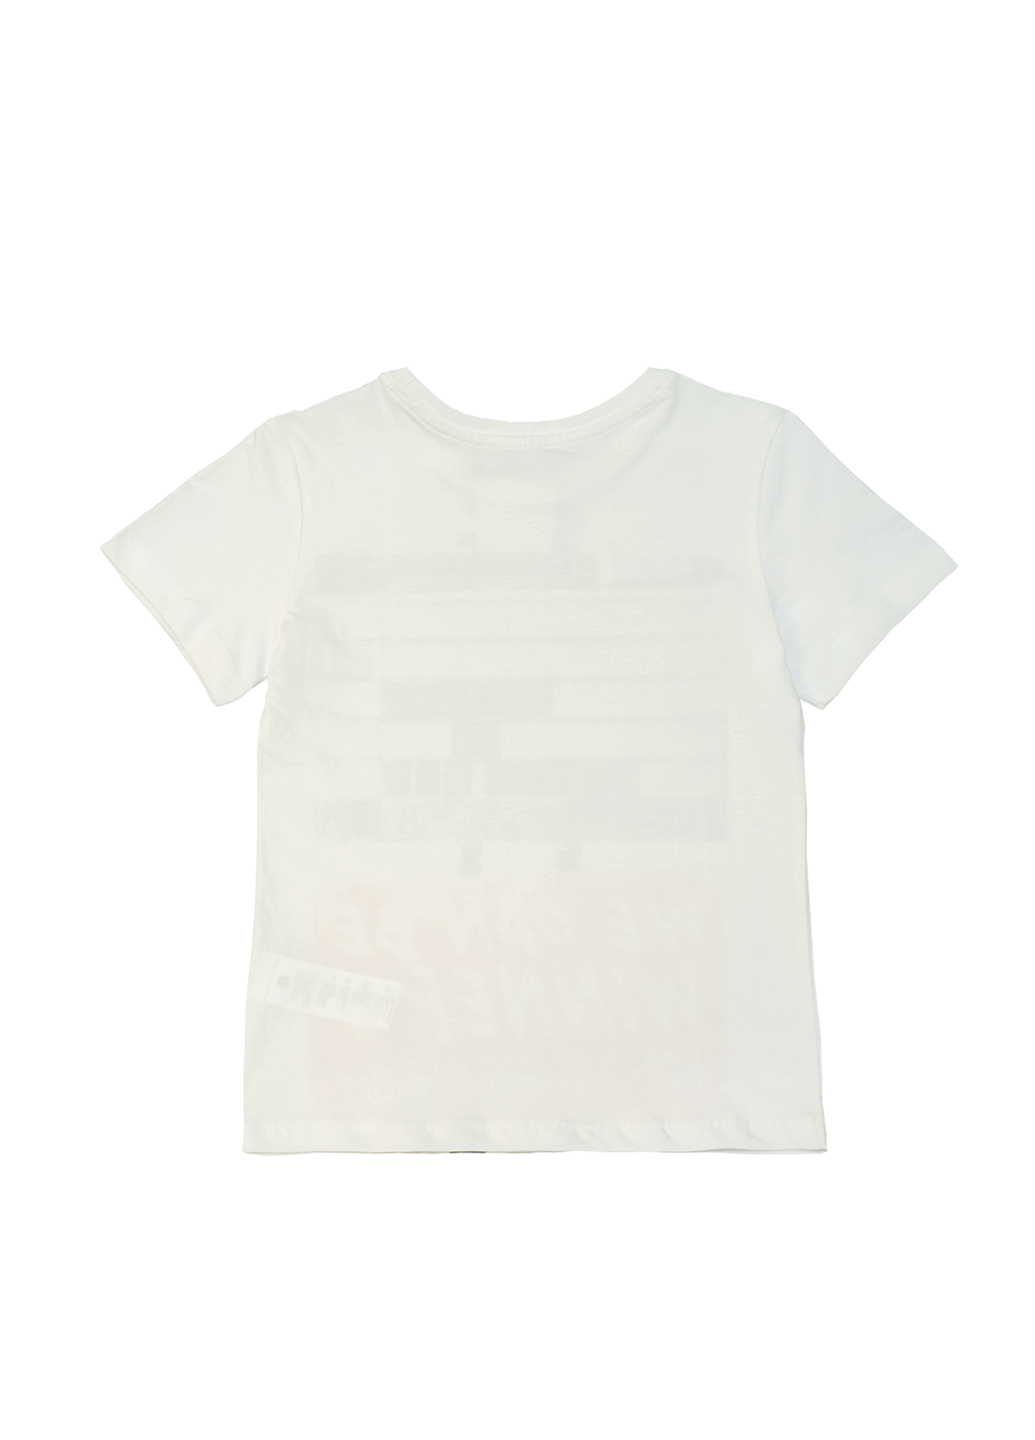 Белая летняя футболка с коротким рукавом Kids Couture